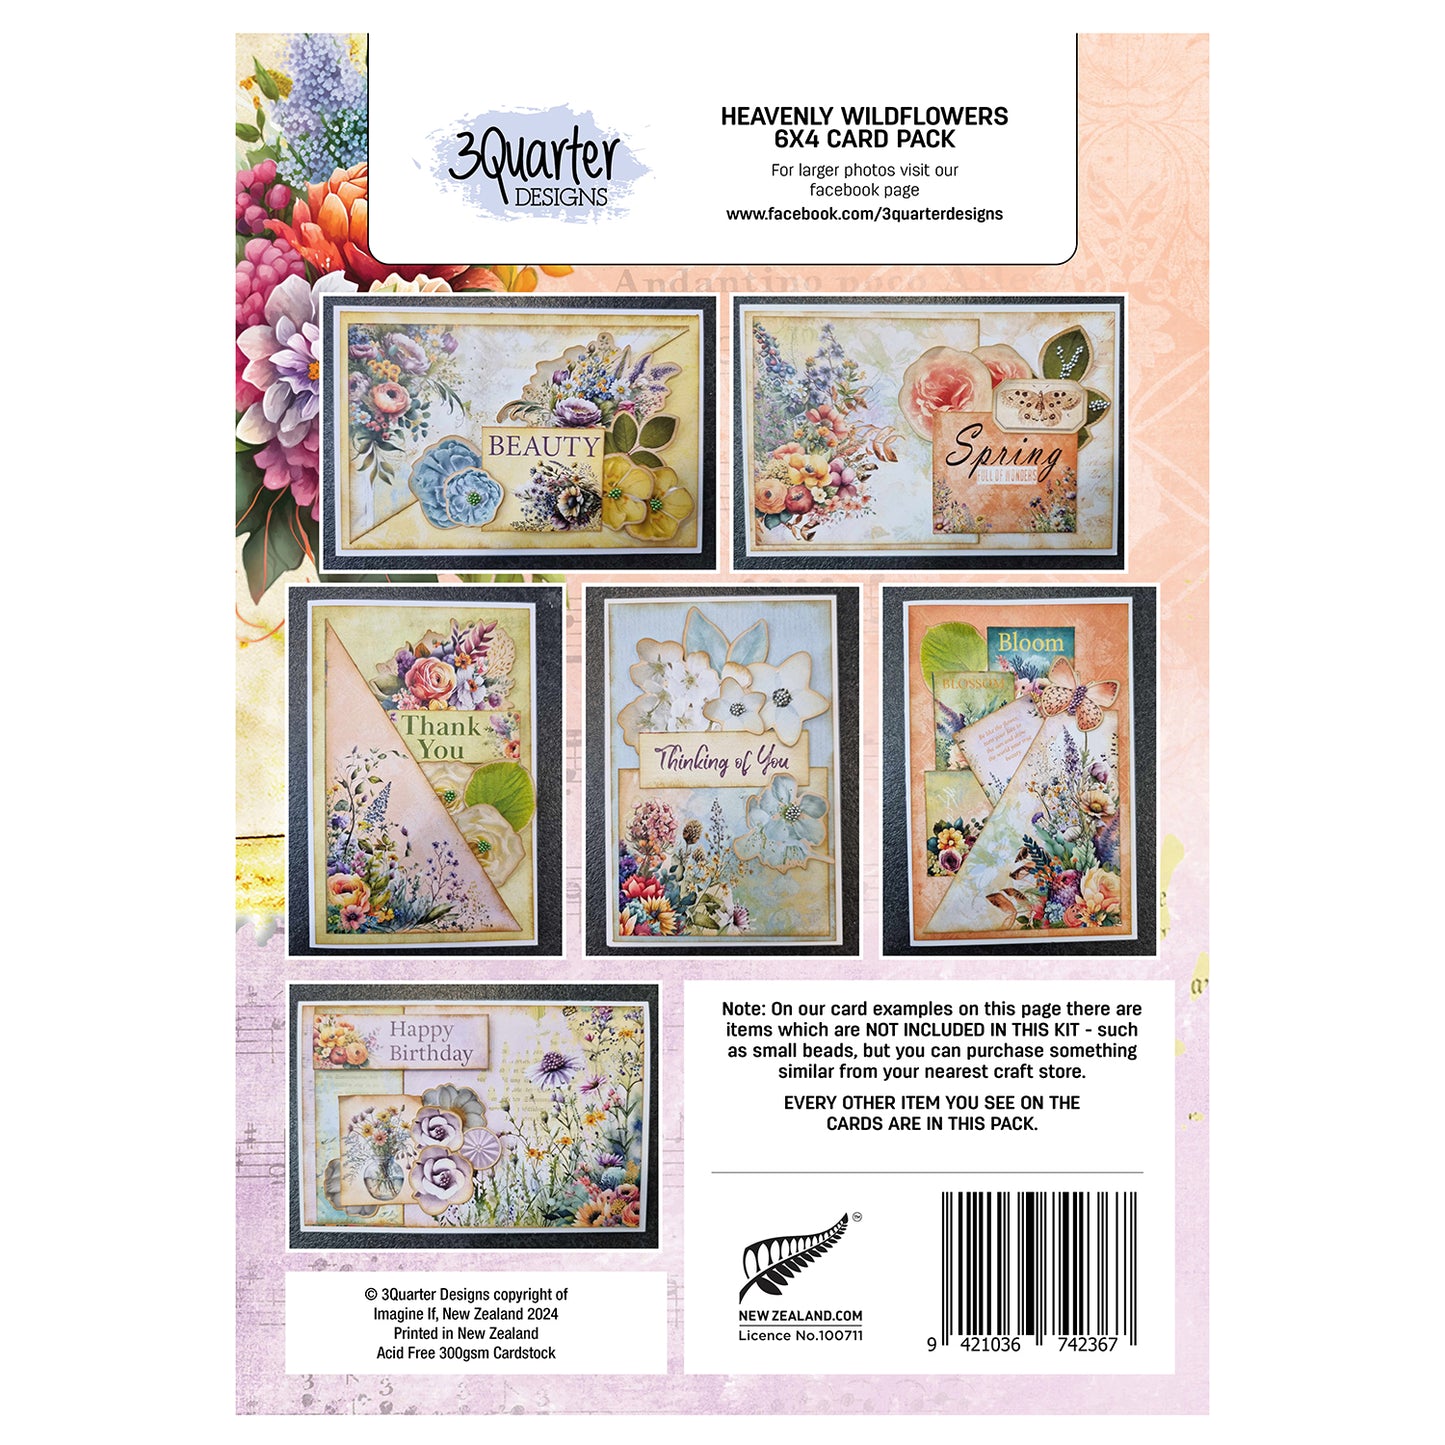 3 Quarter Designs -Heavenly Wildflowers 6x4 Card Pack